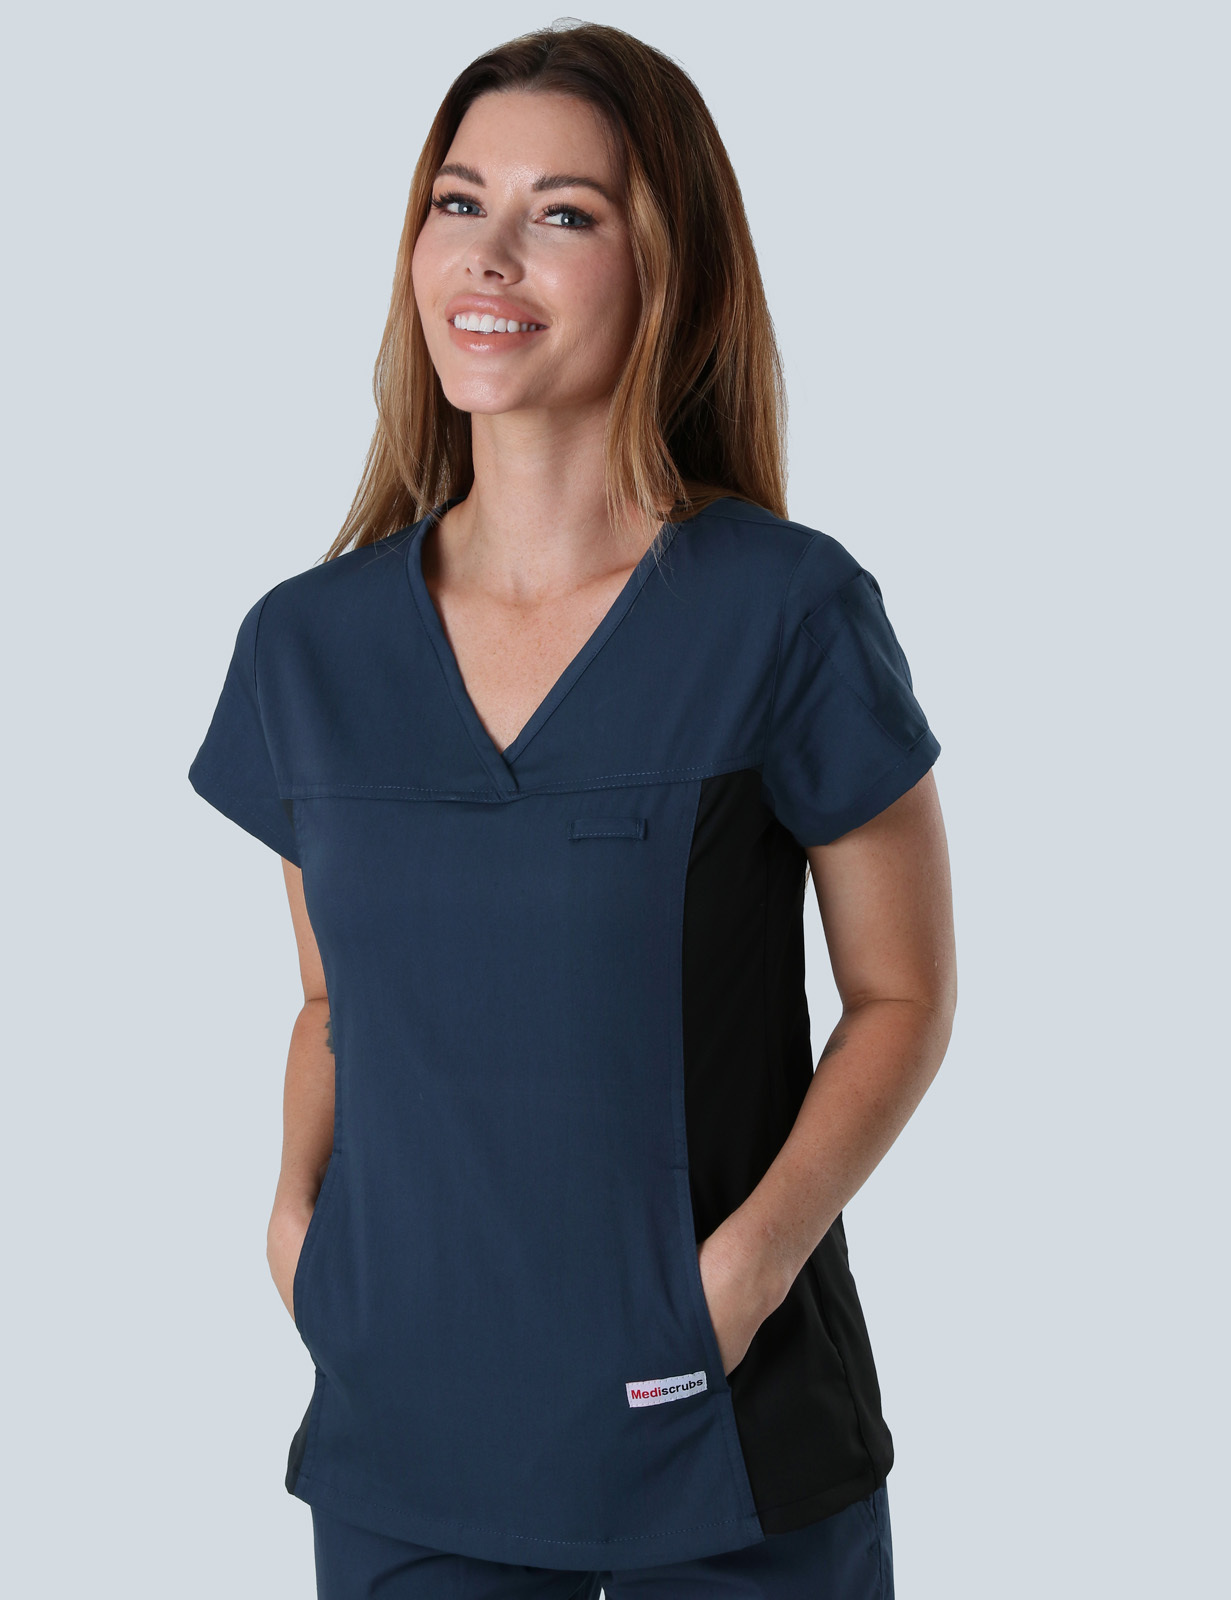 Monash Health Newborn Nurse Uniform Set Bundle (Women's Fit Spandex Top and Cargo Pants in Navy + Logo)